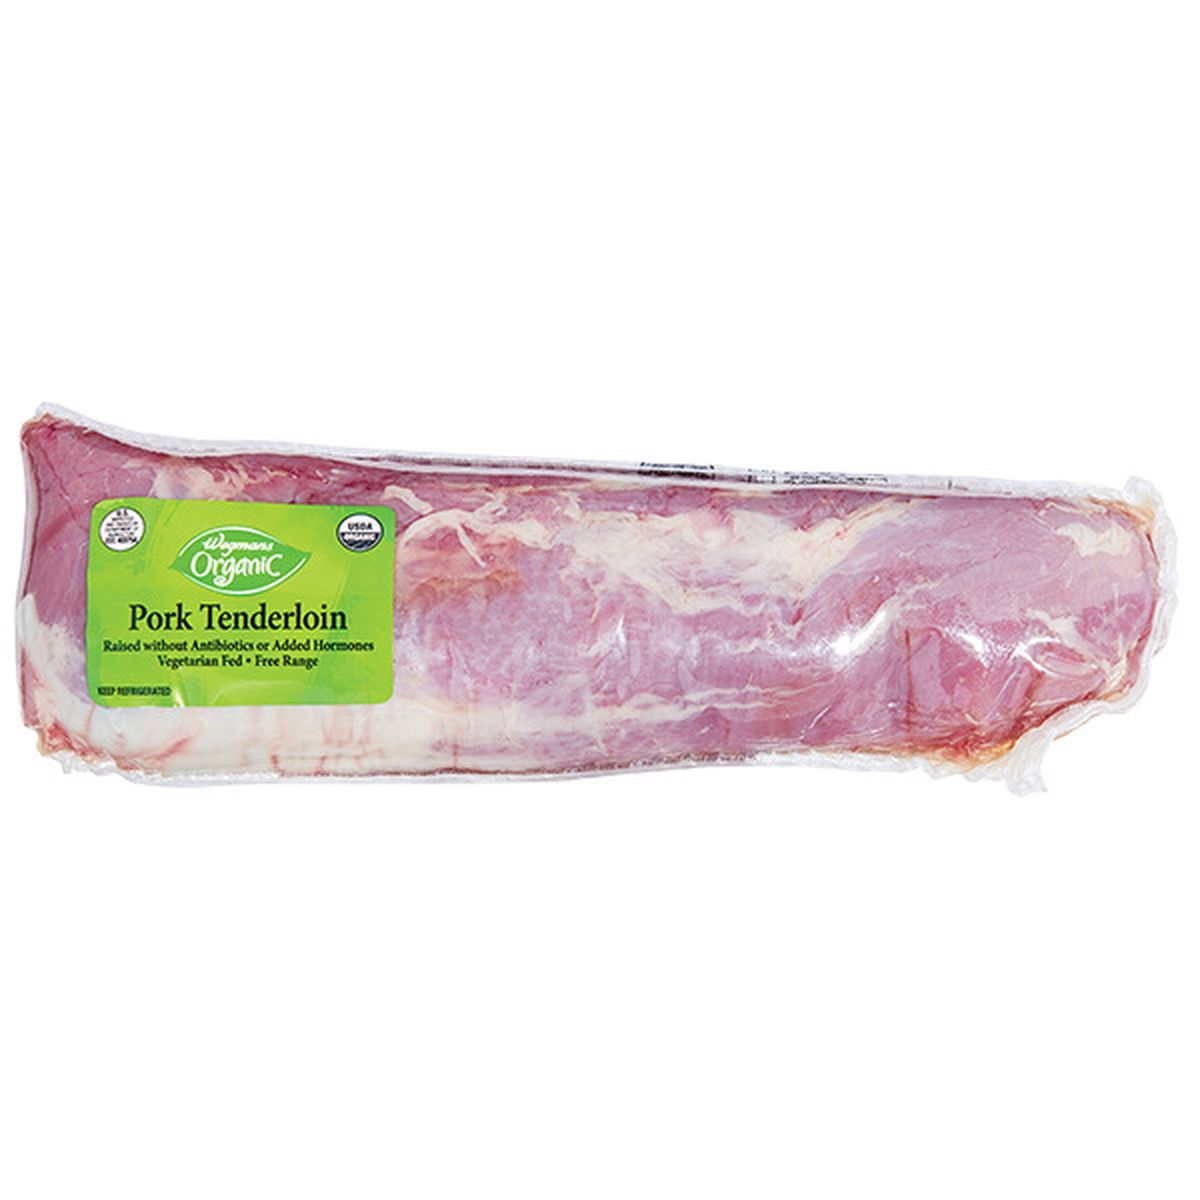 Calories in Wegmans Organic Pork Tenderloin